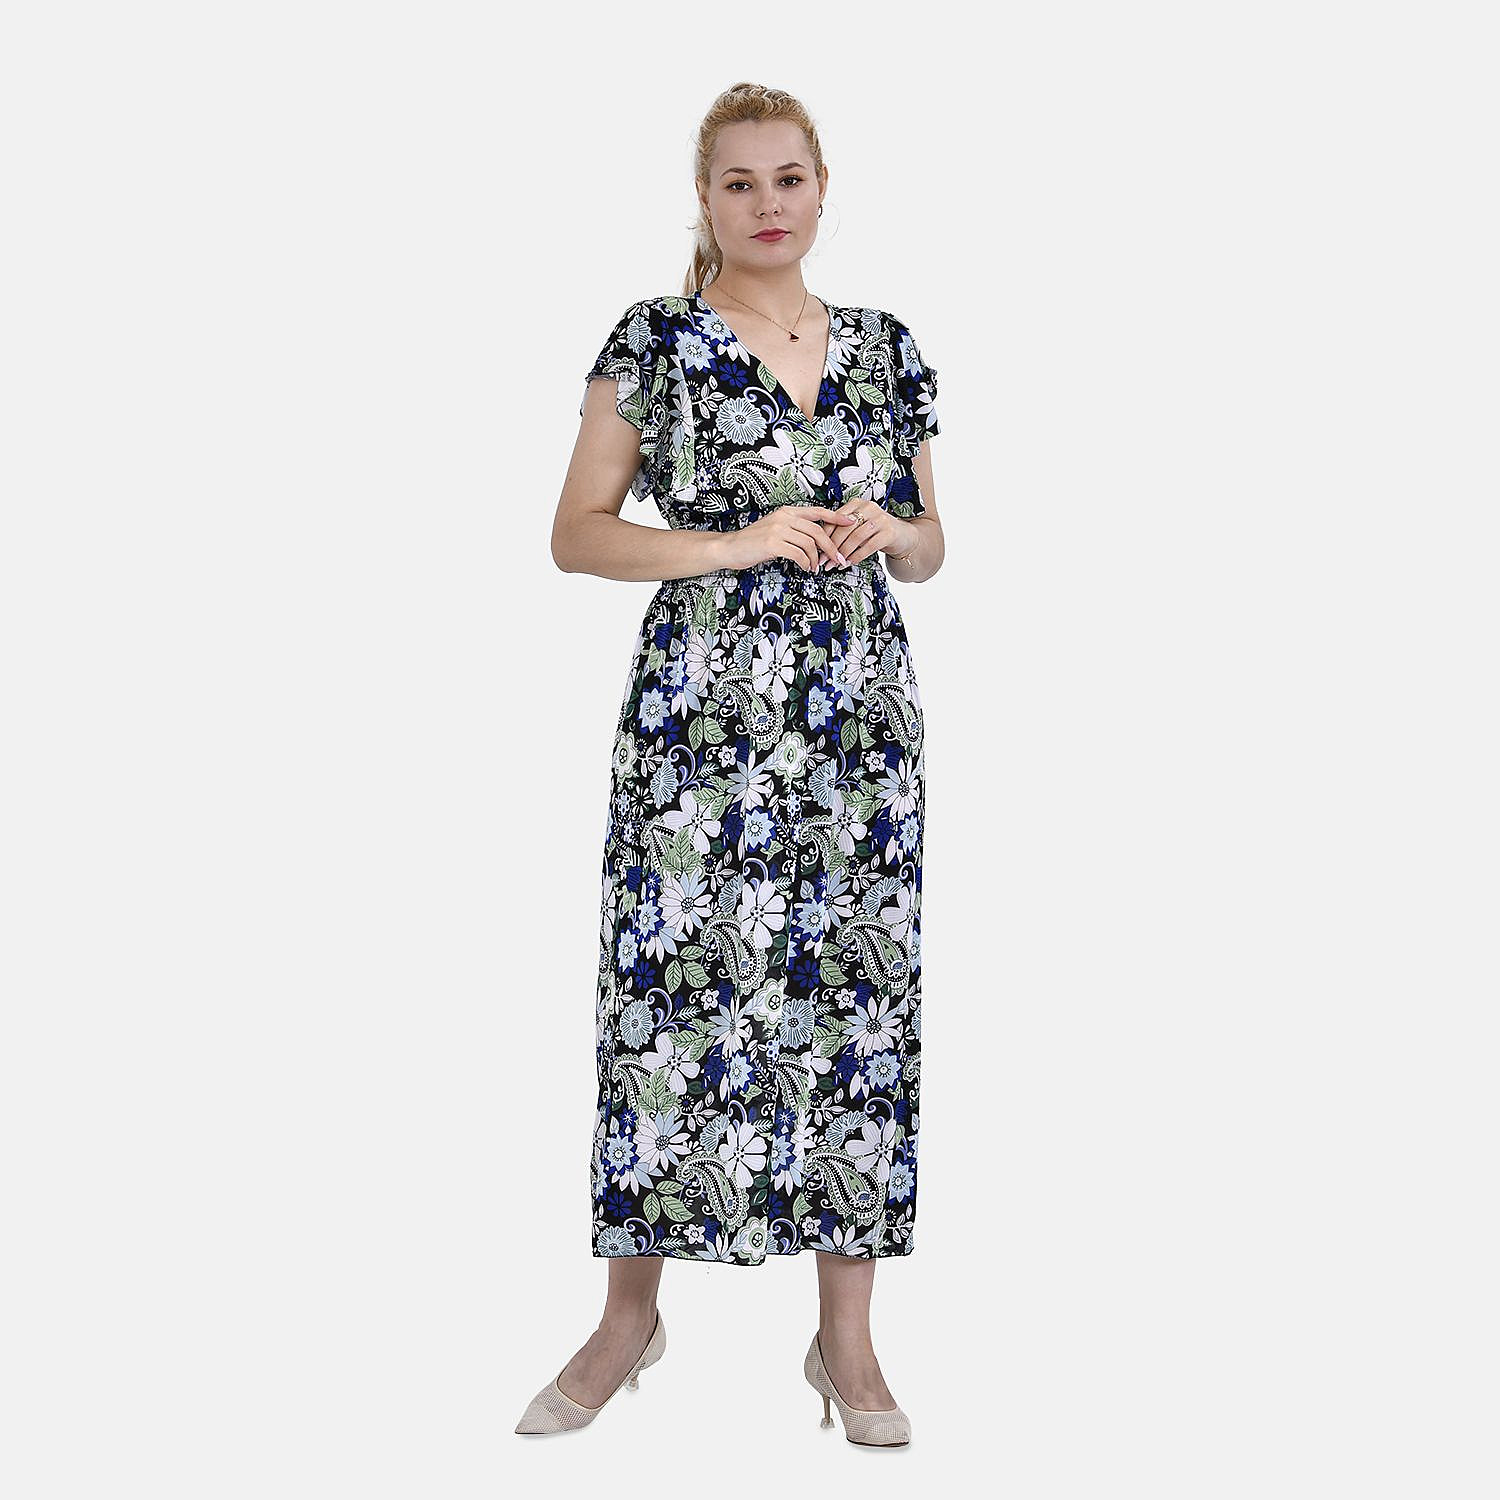 TAMSY Flutter Sleeve Smocked Floral & Leaf Printed Midi Dress (One Size Curve,20-26) - Multi